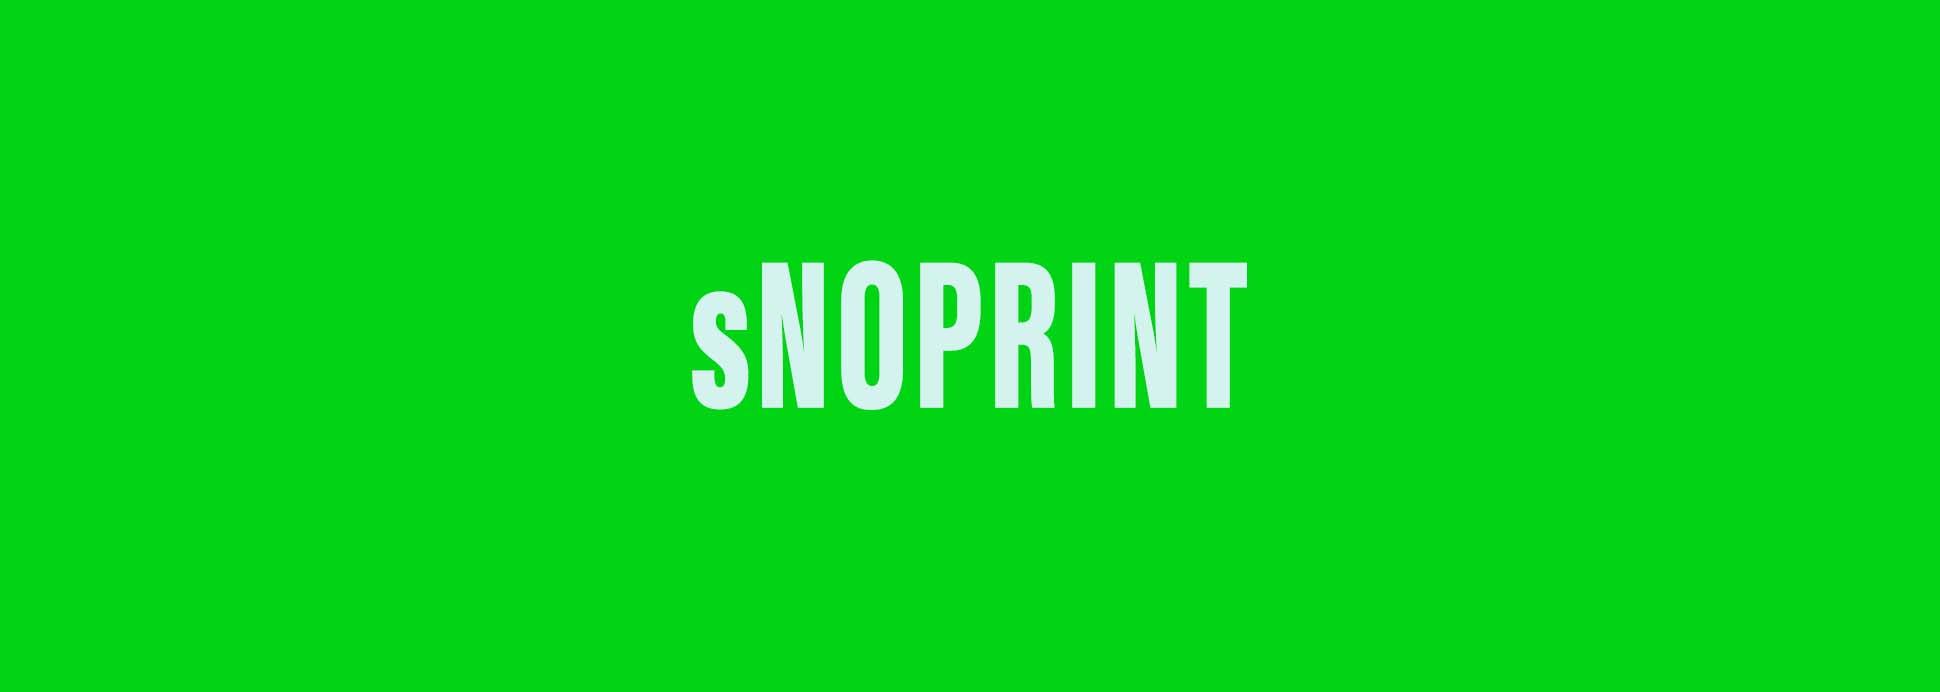 sNOprint